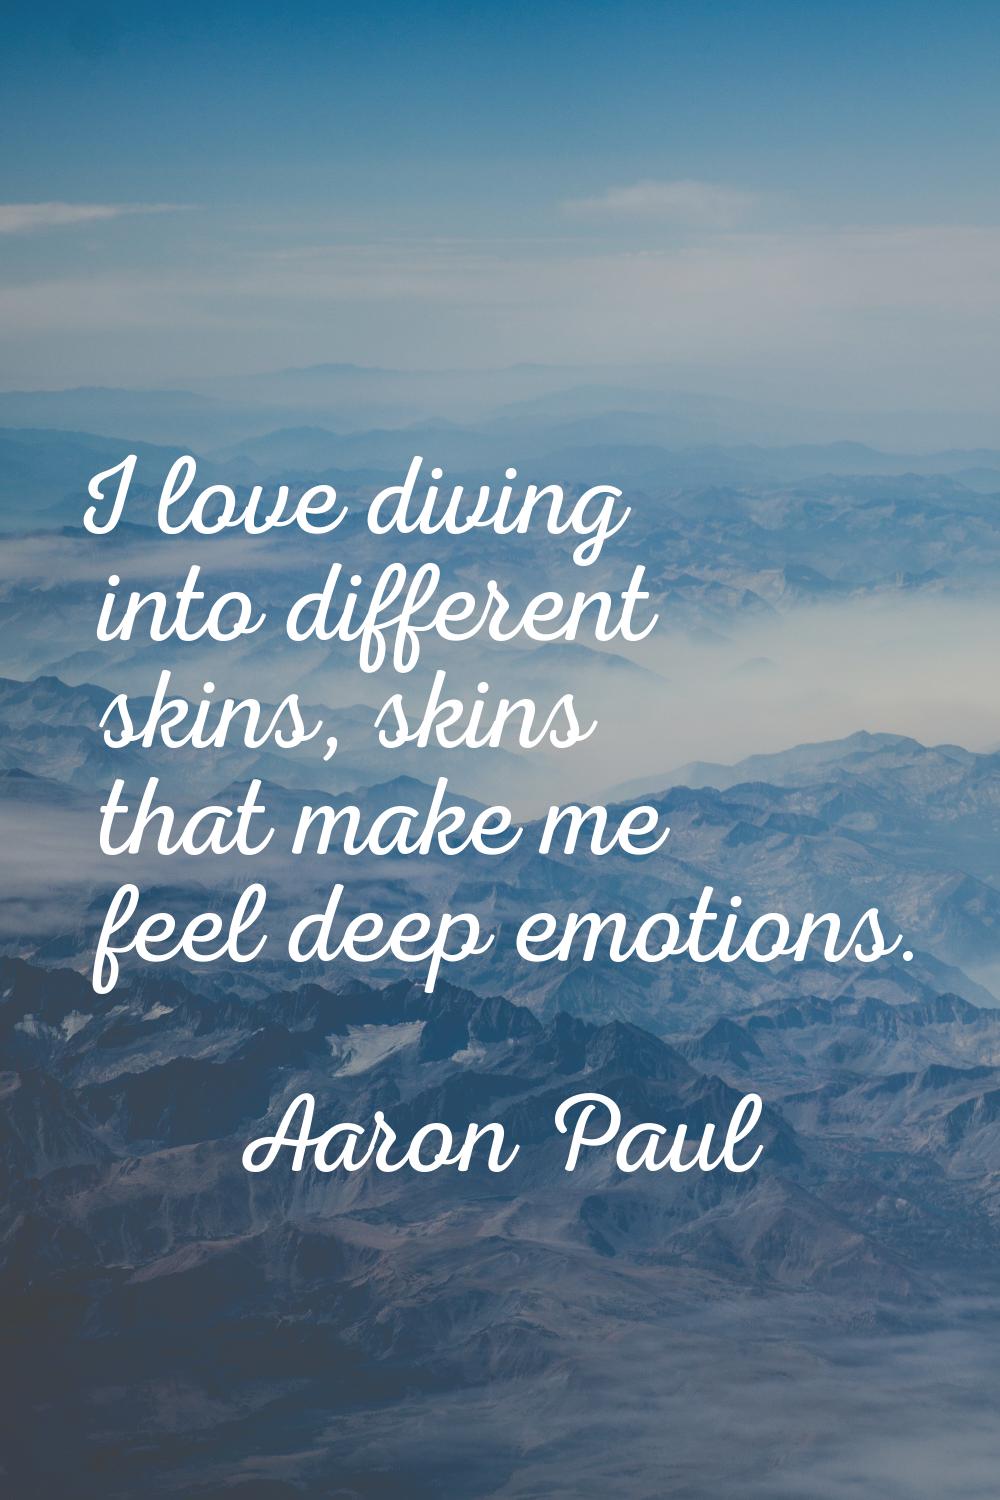 I love diving into different skins, skins that make me feel deep emotions.